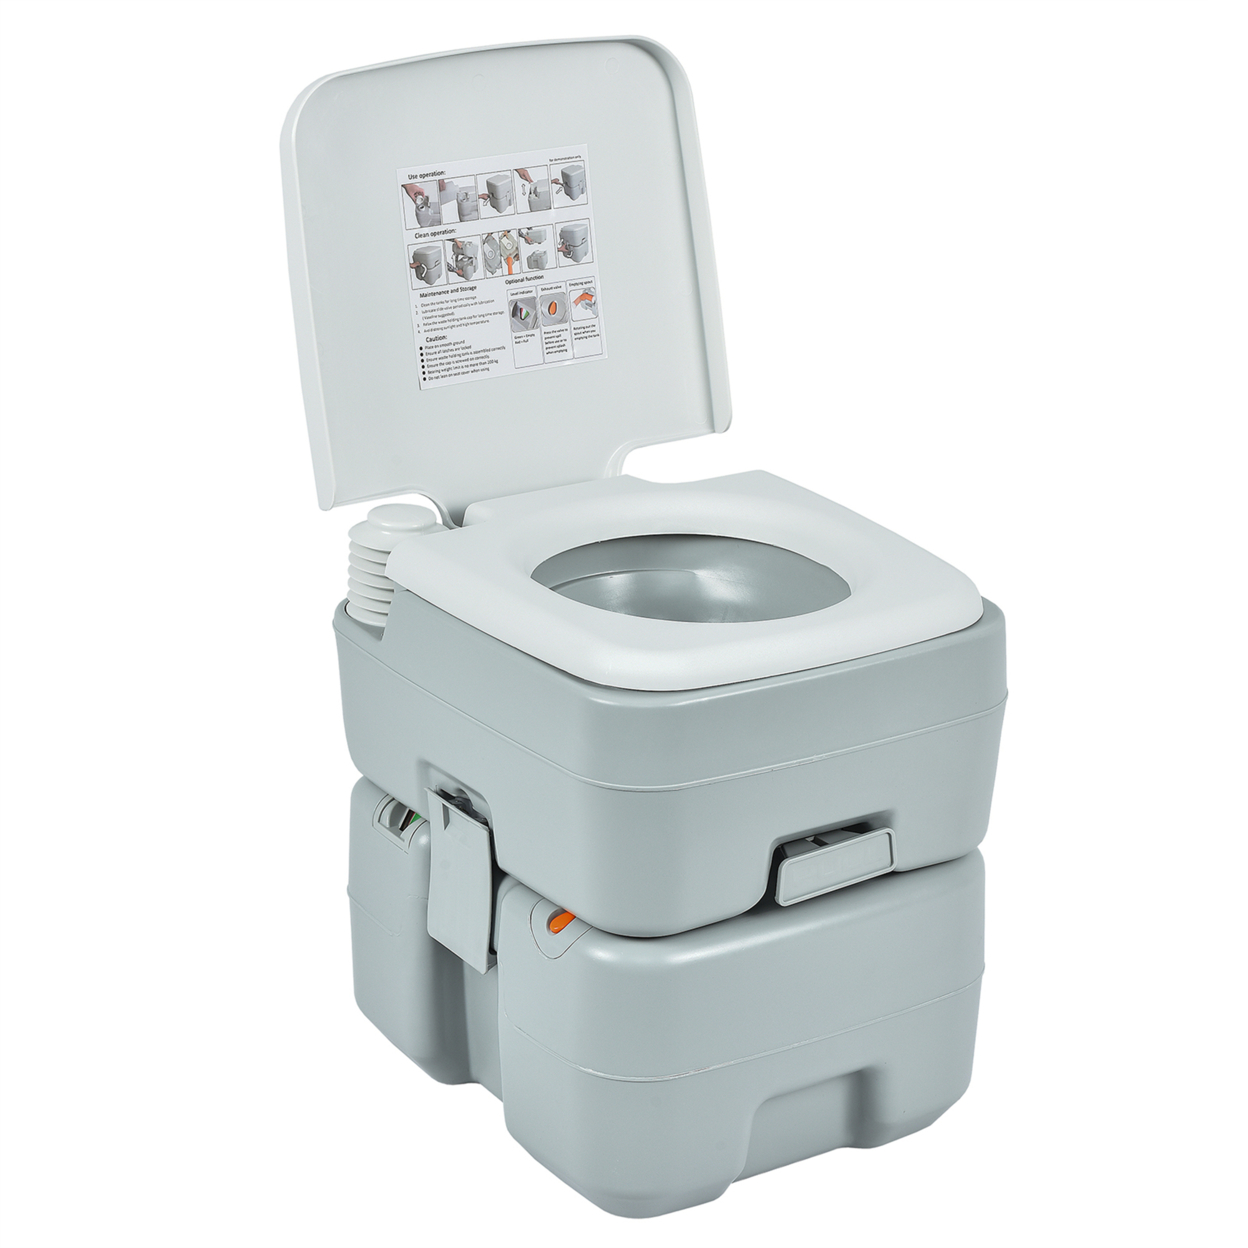 Portable Toilet 5.3 Gallon Outdoor Camping Traveling Toilet W/ Flush Pump